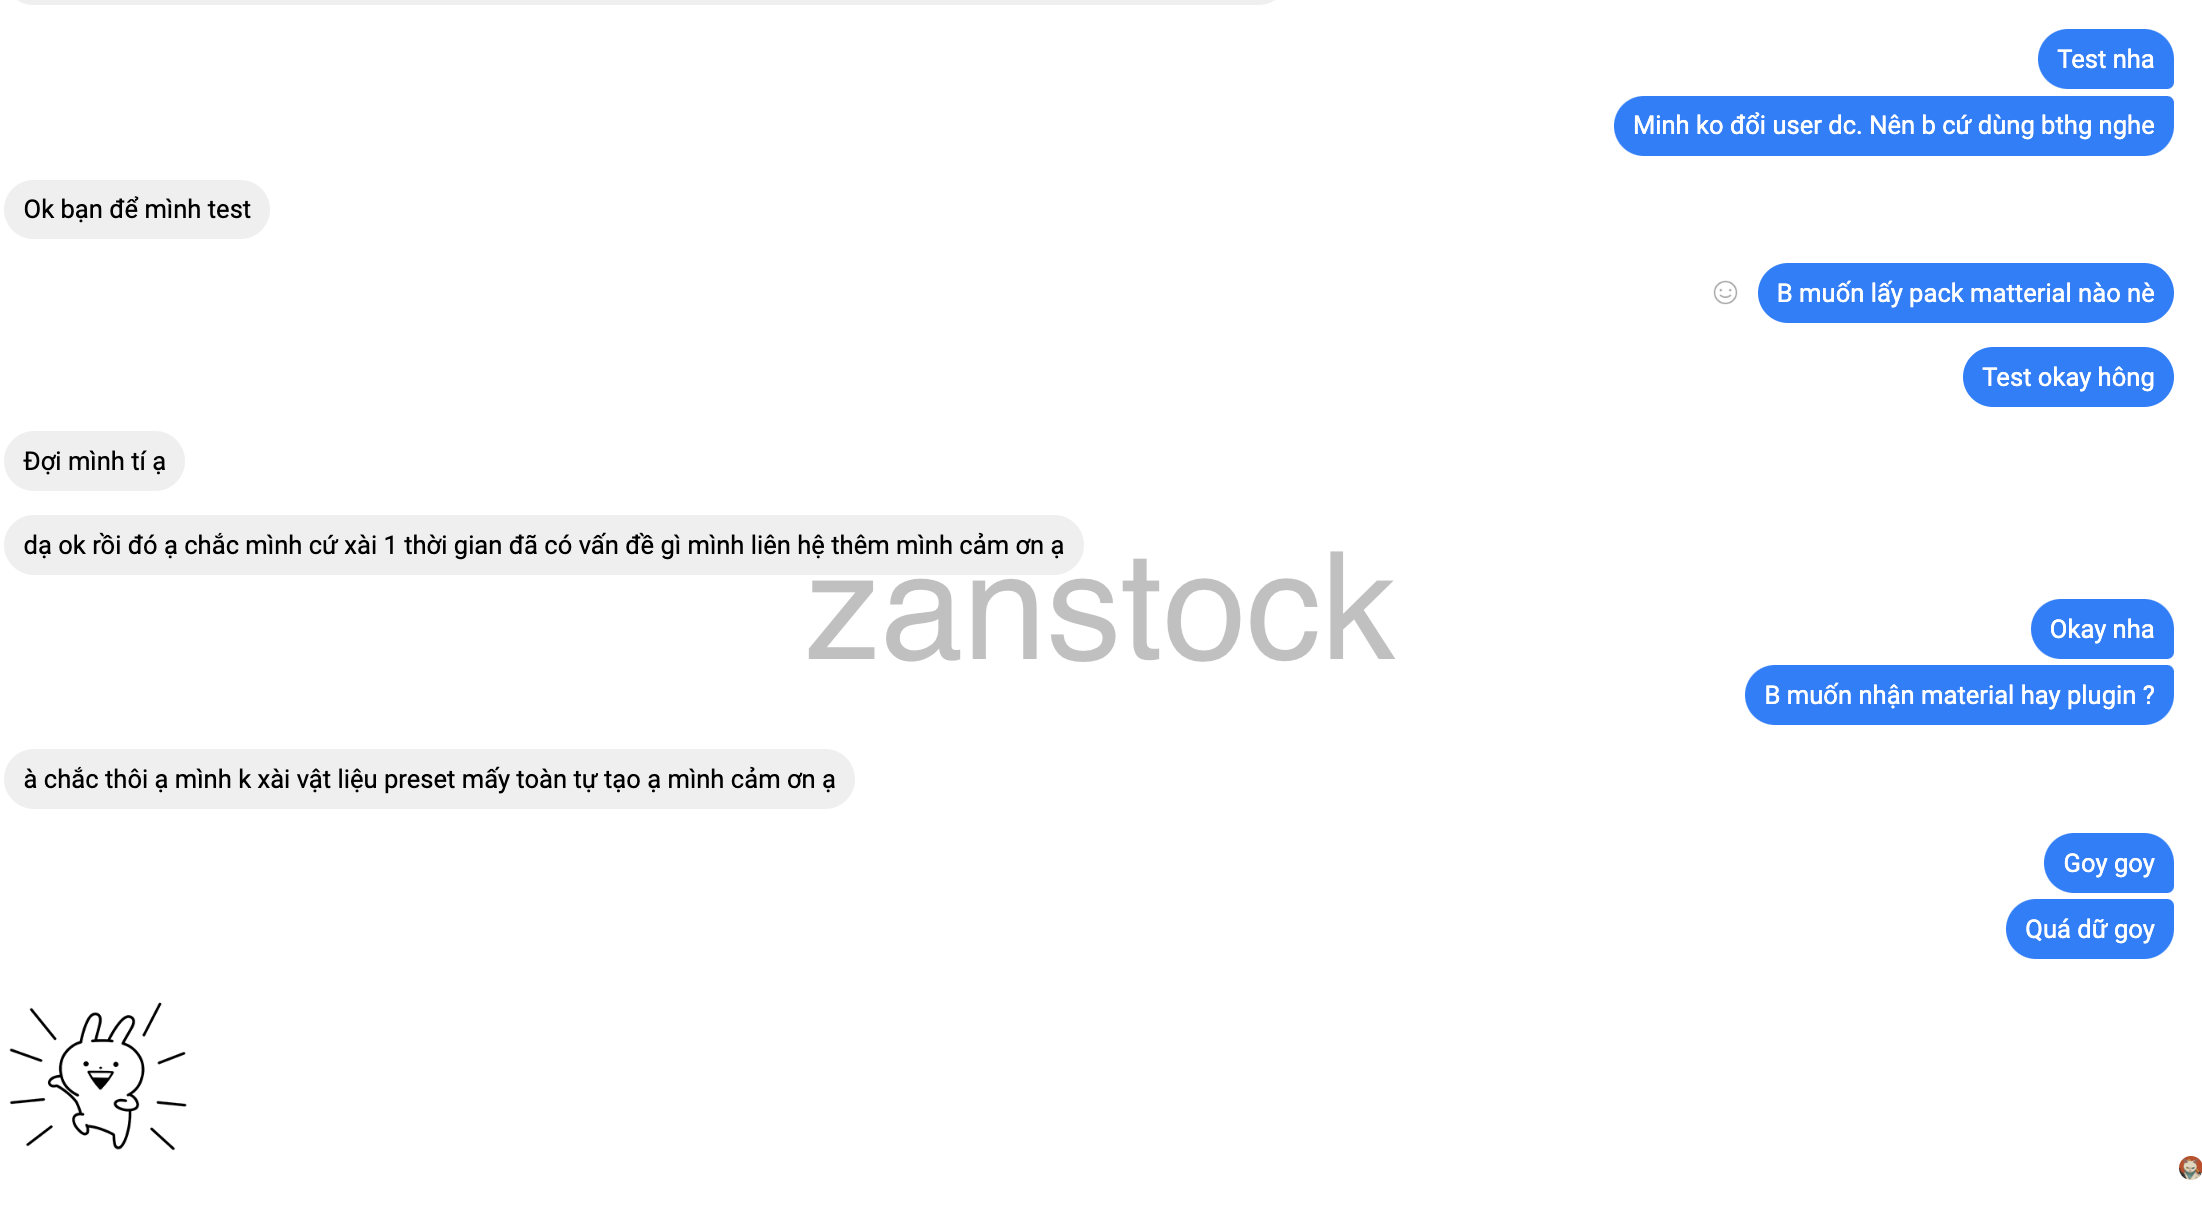 mua octane gia re zanstock 2 - Zan Stock